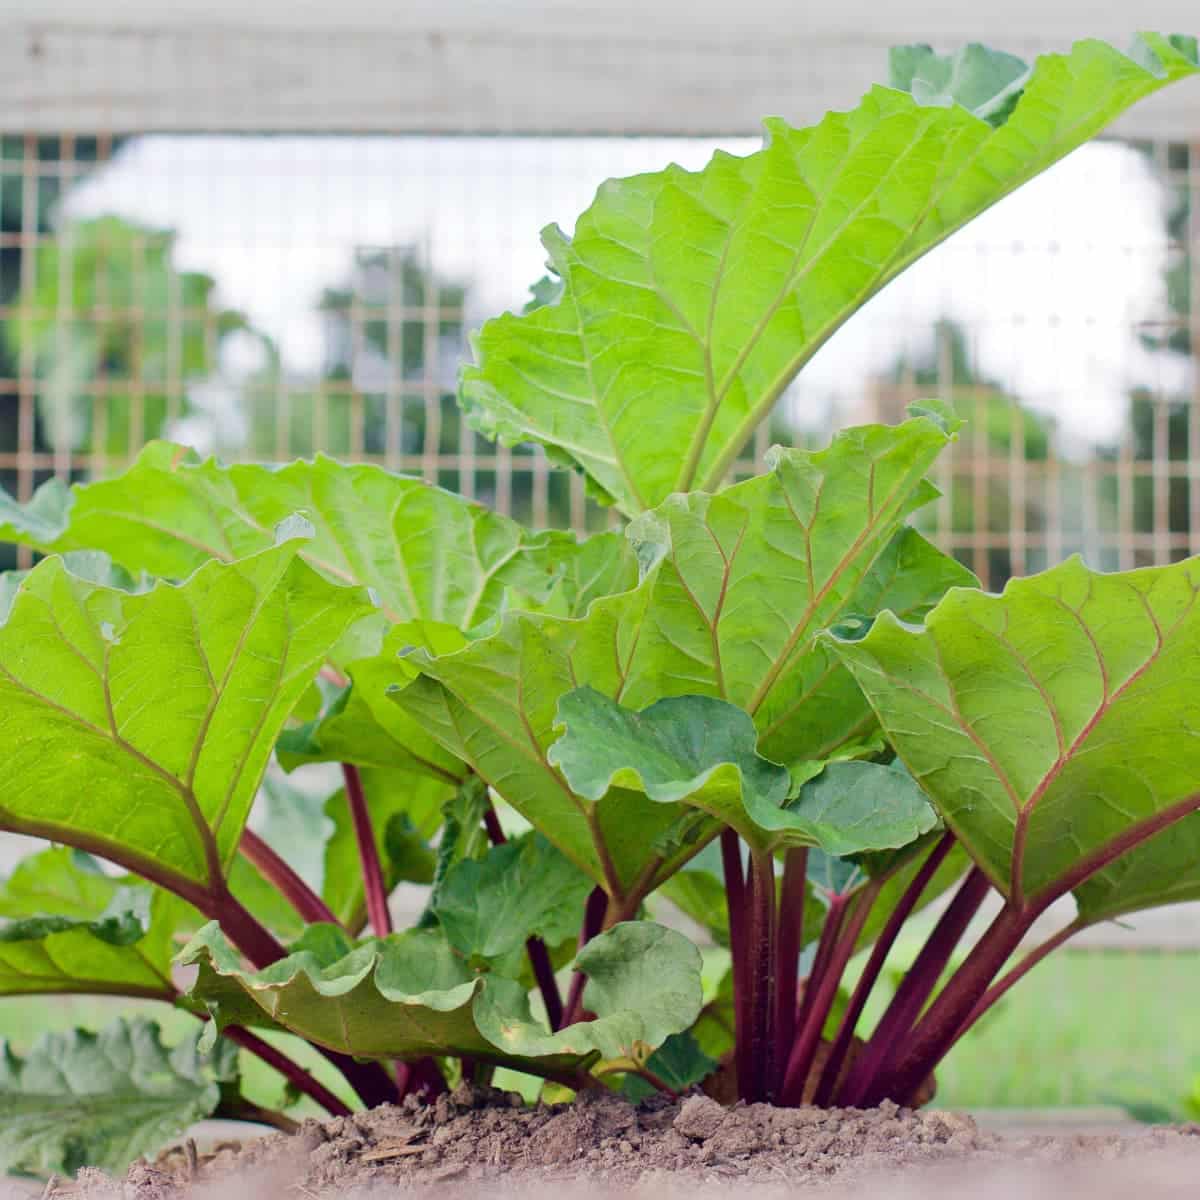 growing rhubarb - tips & tricks for a good harvest - simplify